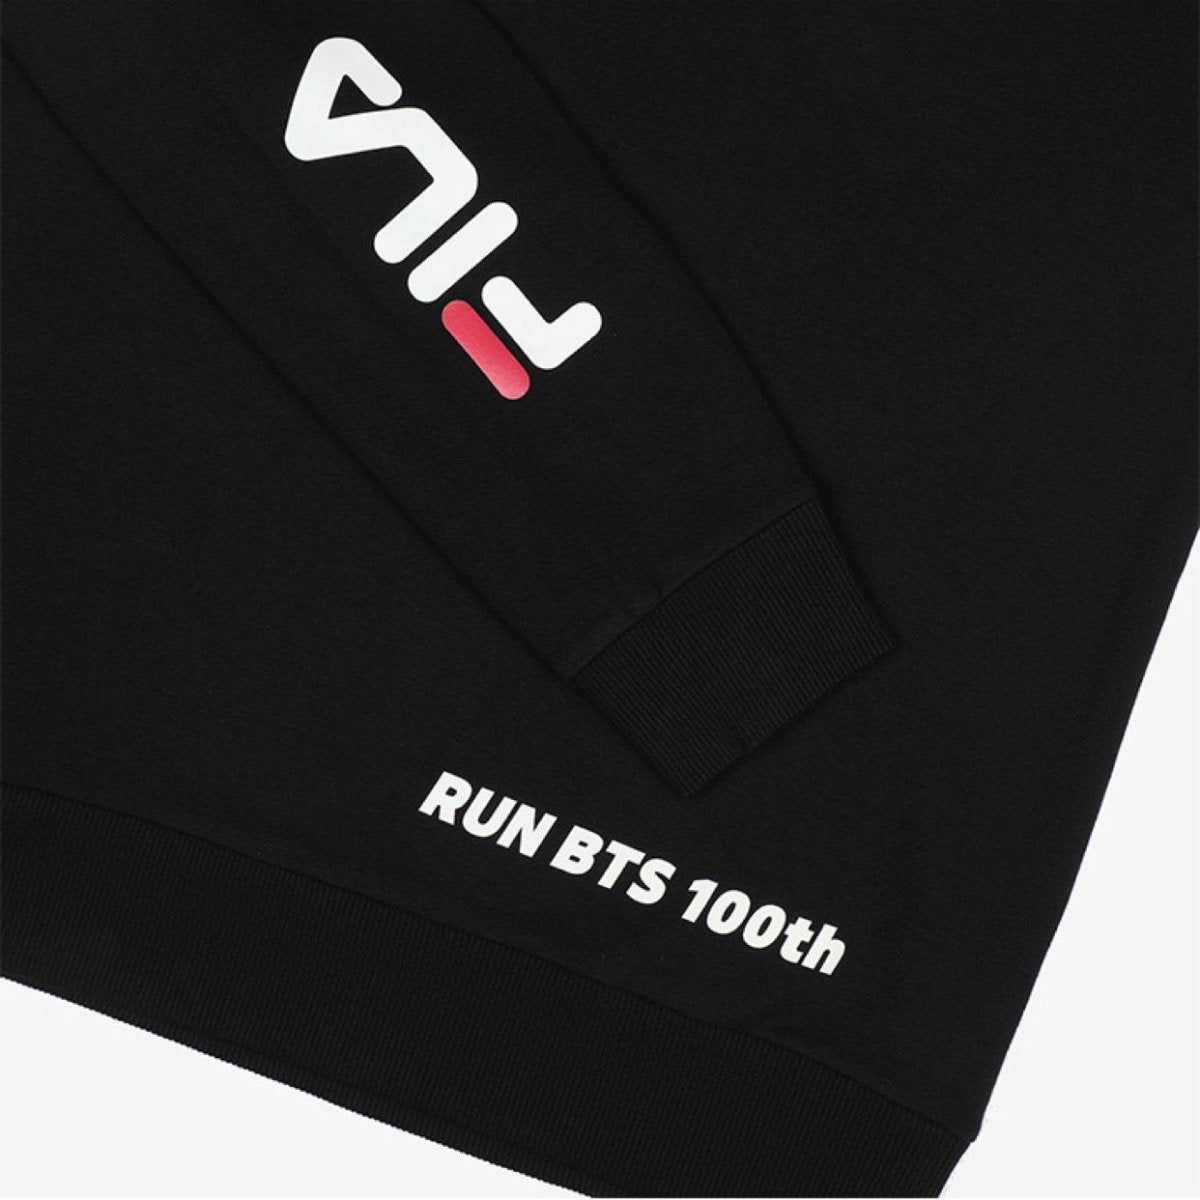 BIG HIT] OFFICIAL Run BTS 100th FILA Sweatshirt (Free Shipping ...